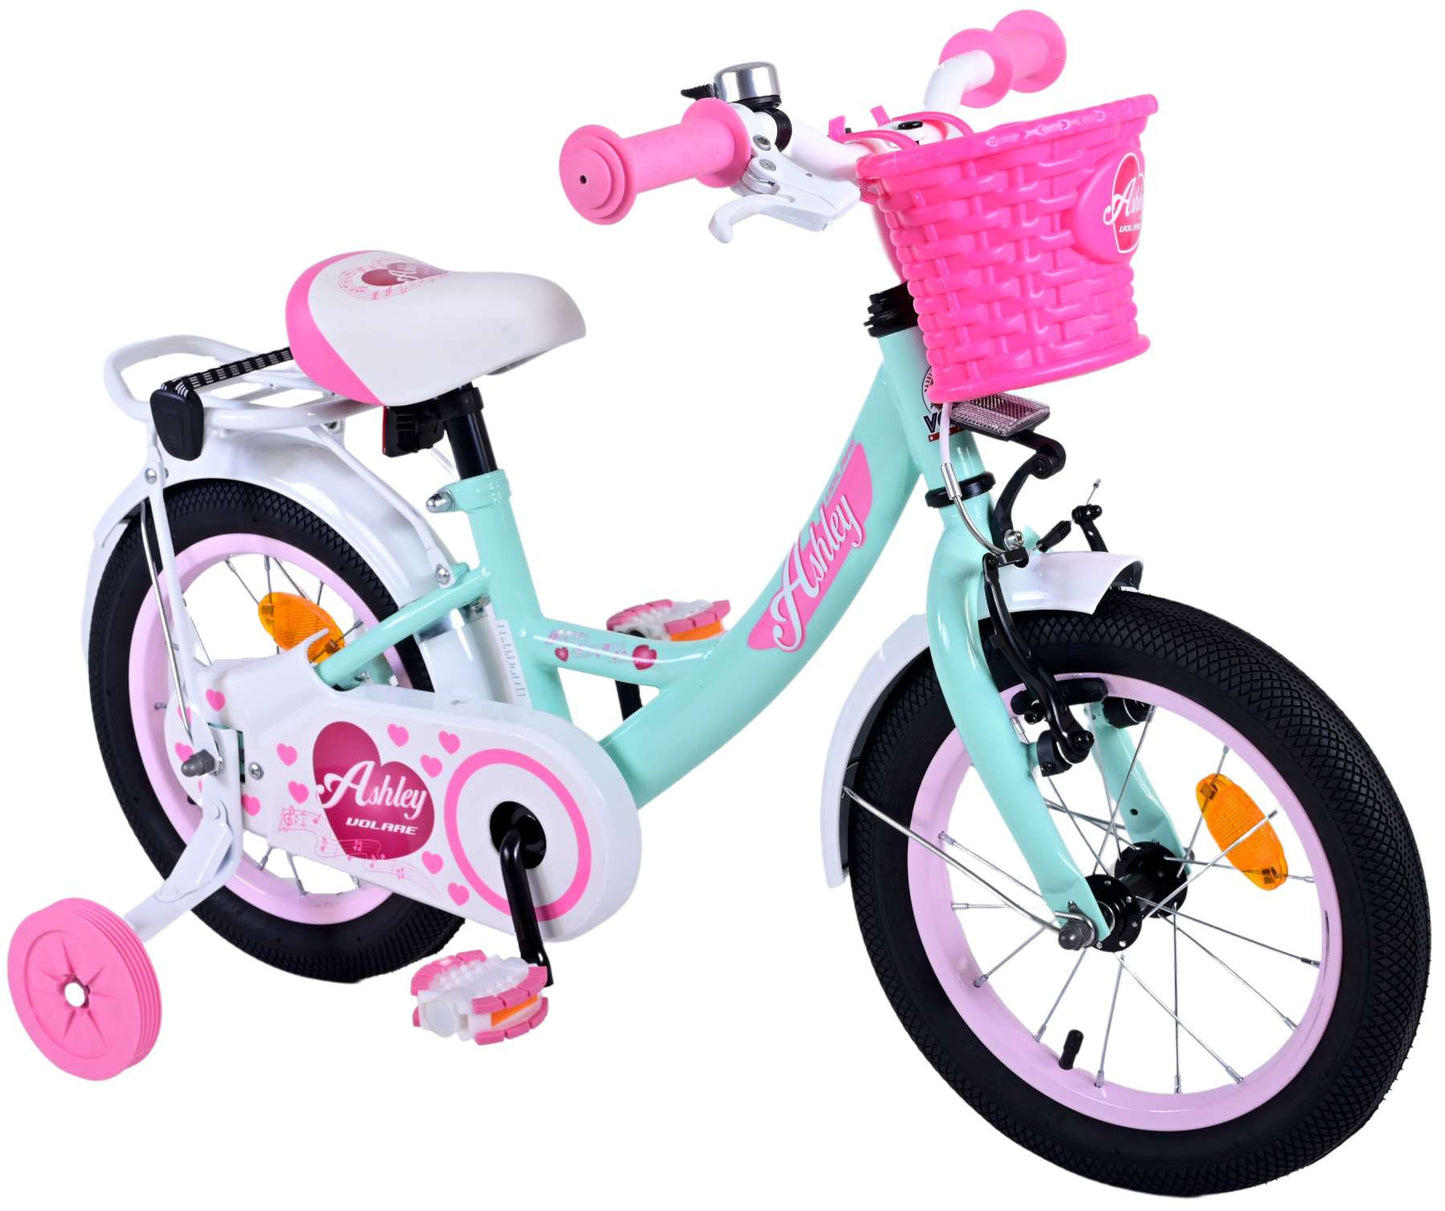 Bicicleta para niños de Vinare Ashley - Niñas - 14 pulgadas - Verde